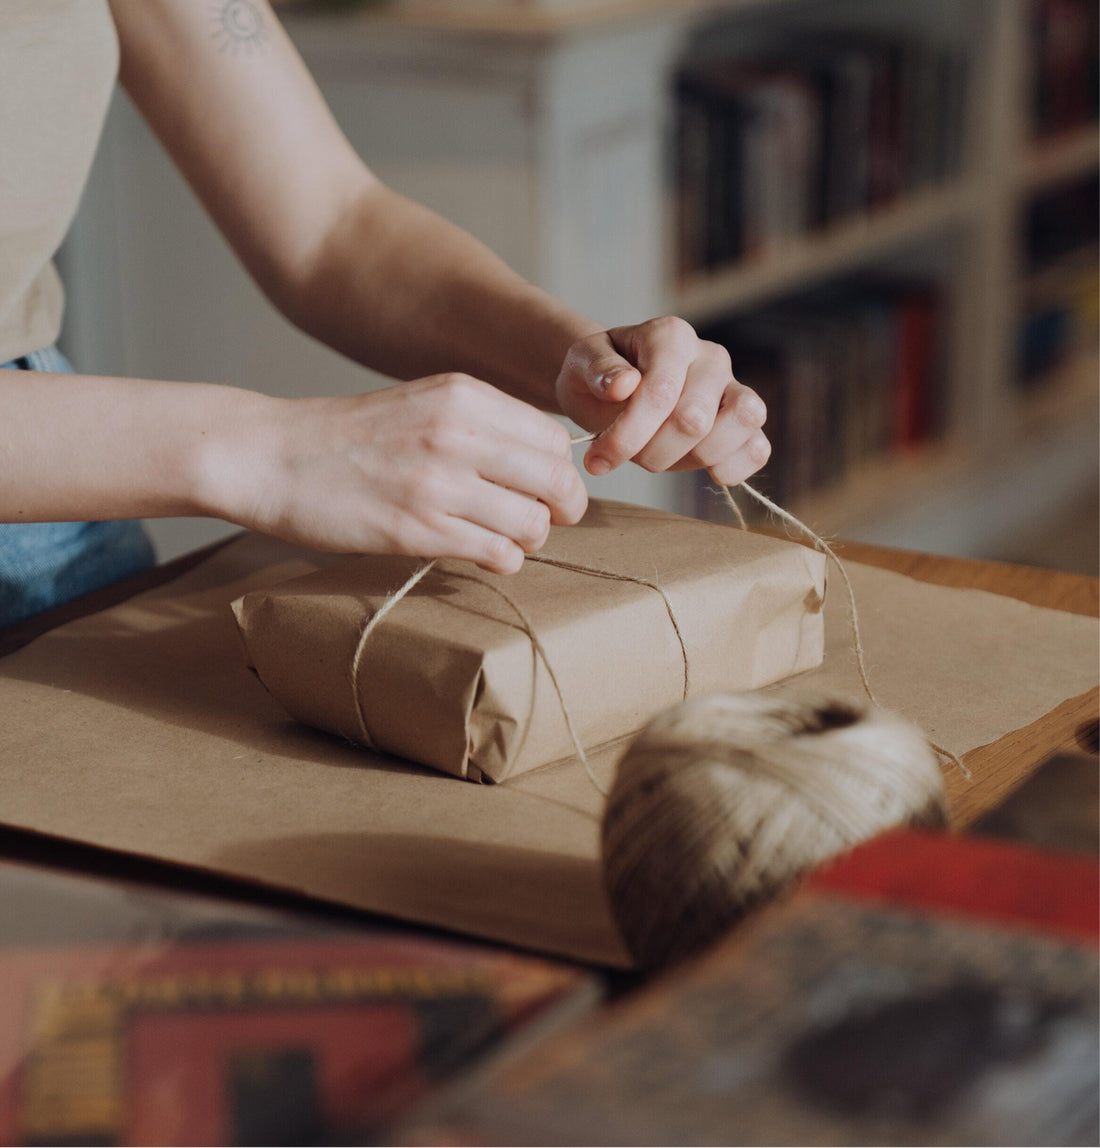 Wrap Gifts Like a Pro, Minimize Waste